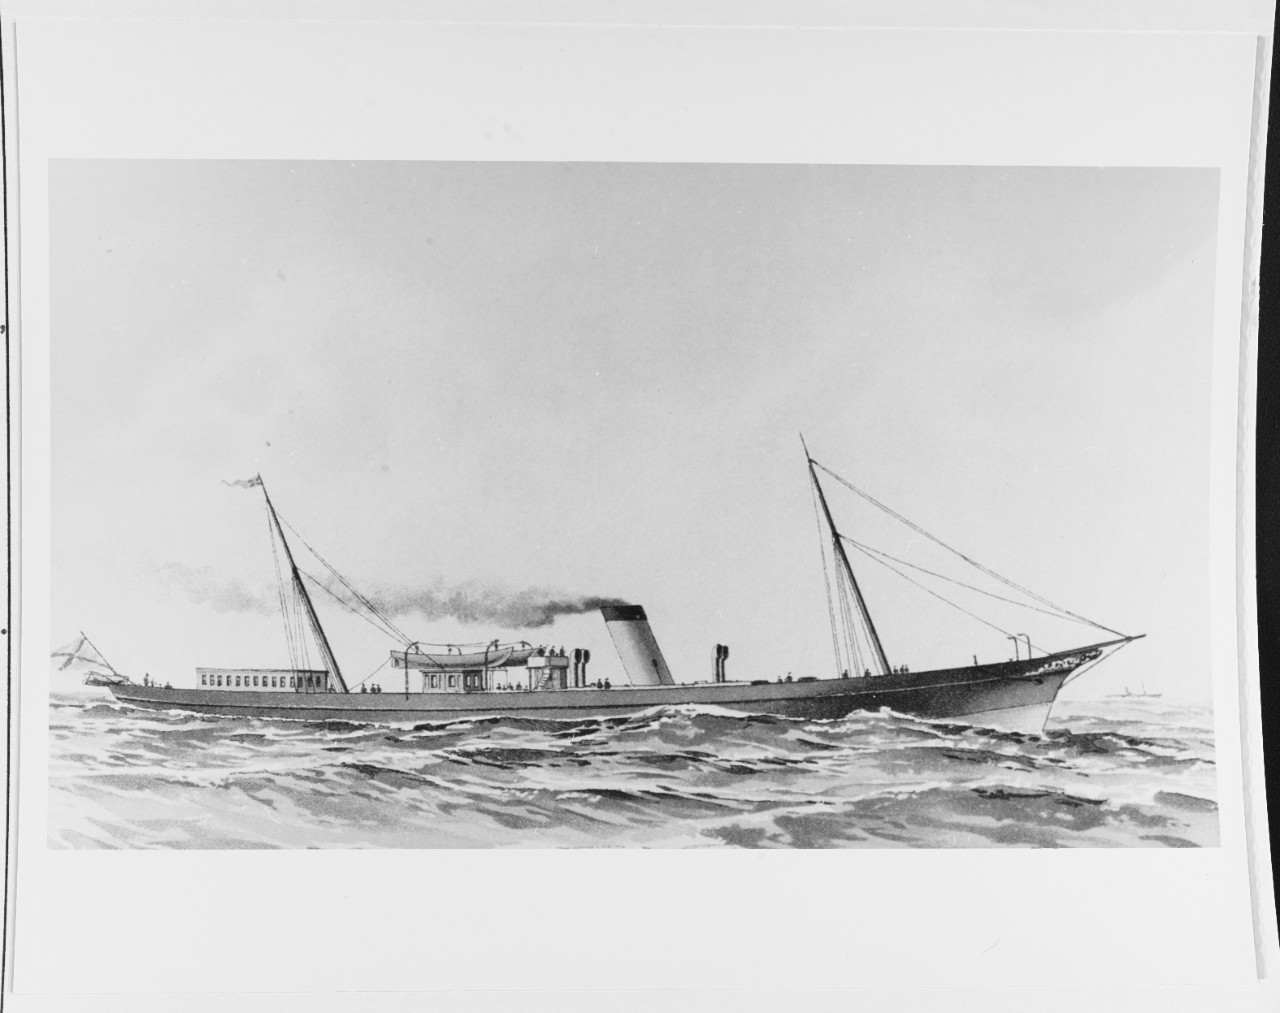 ATRELA (Russian Naval Yacht, 1891)